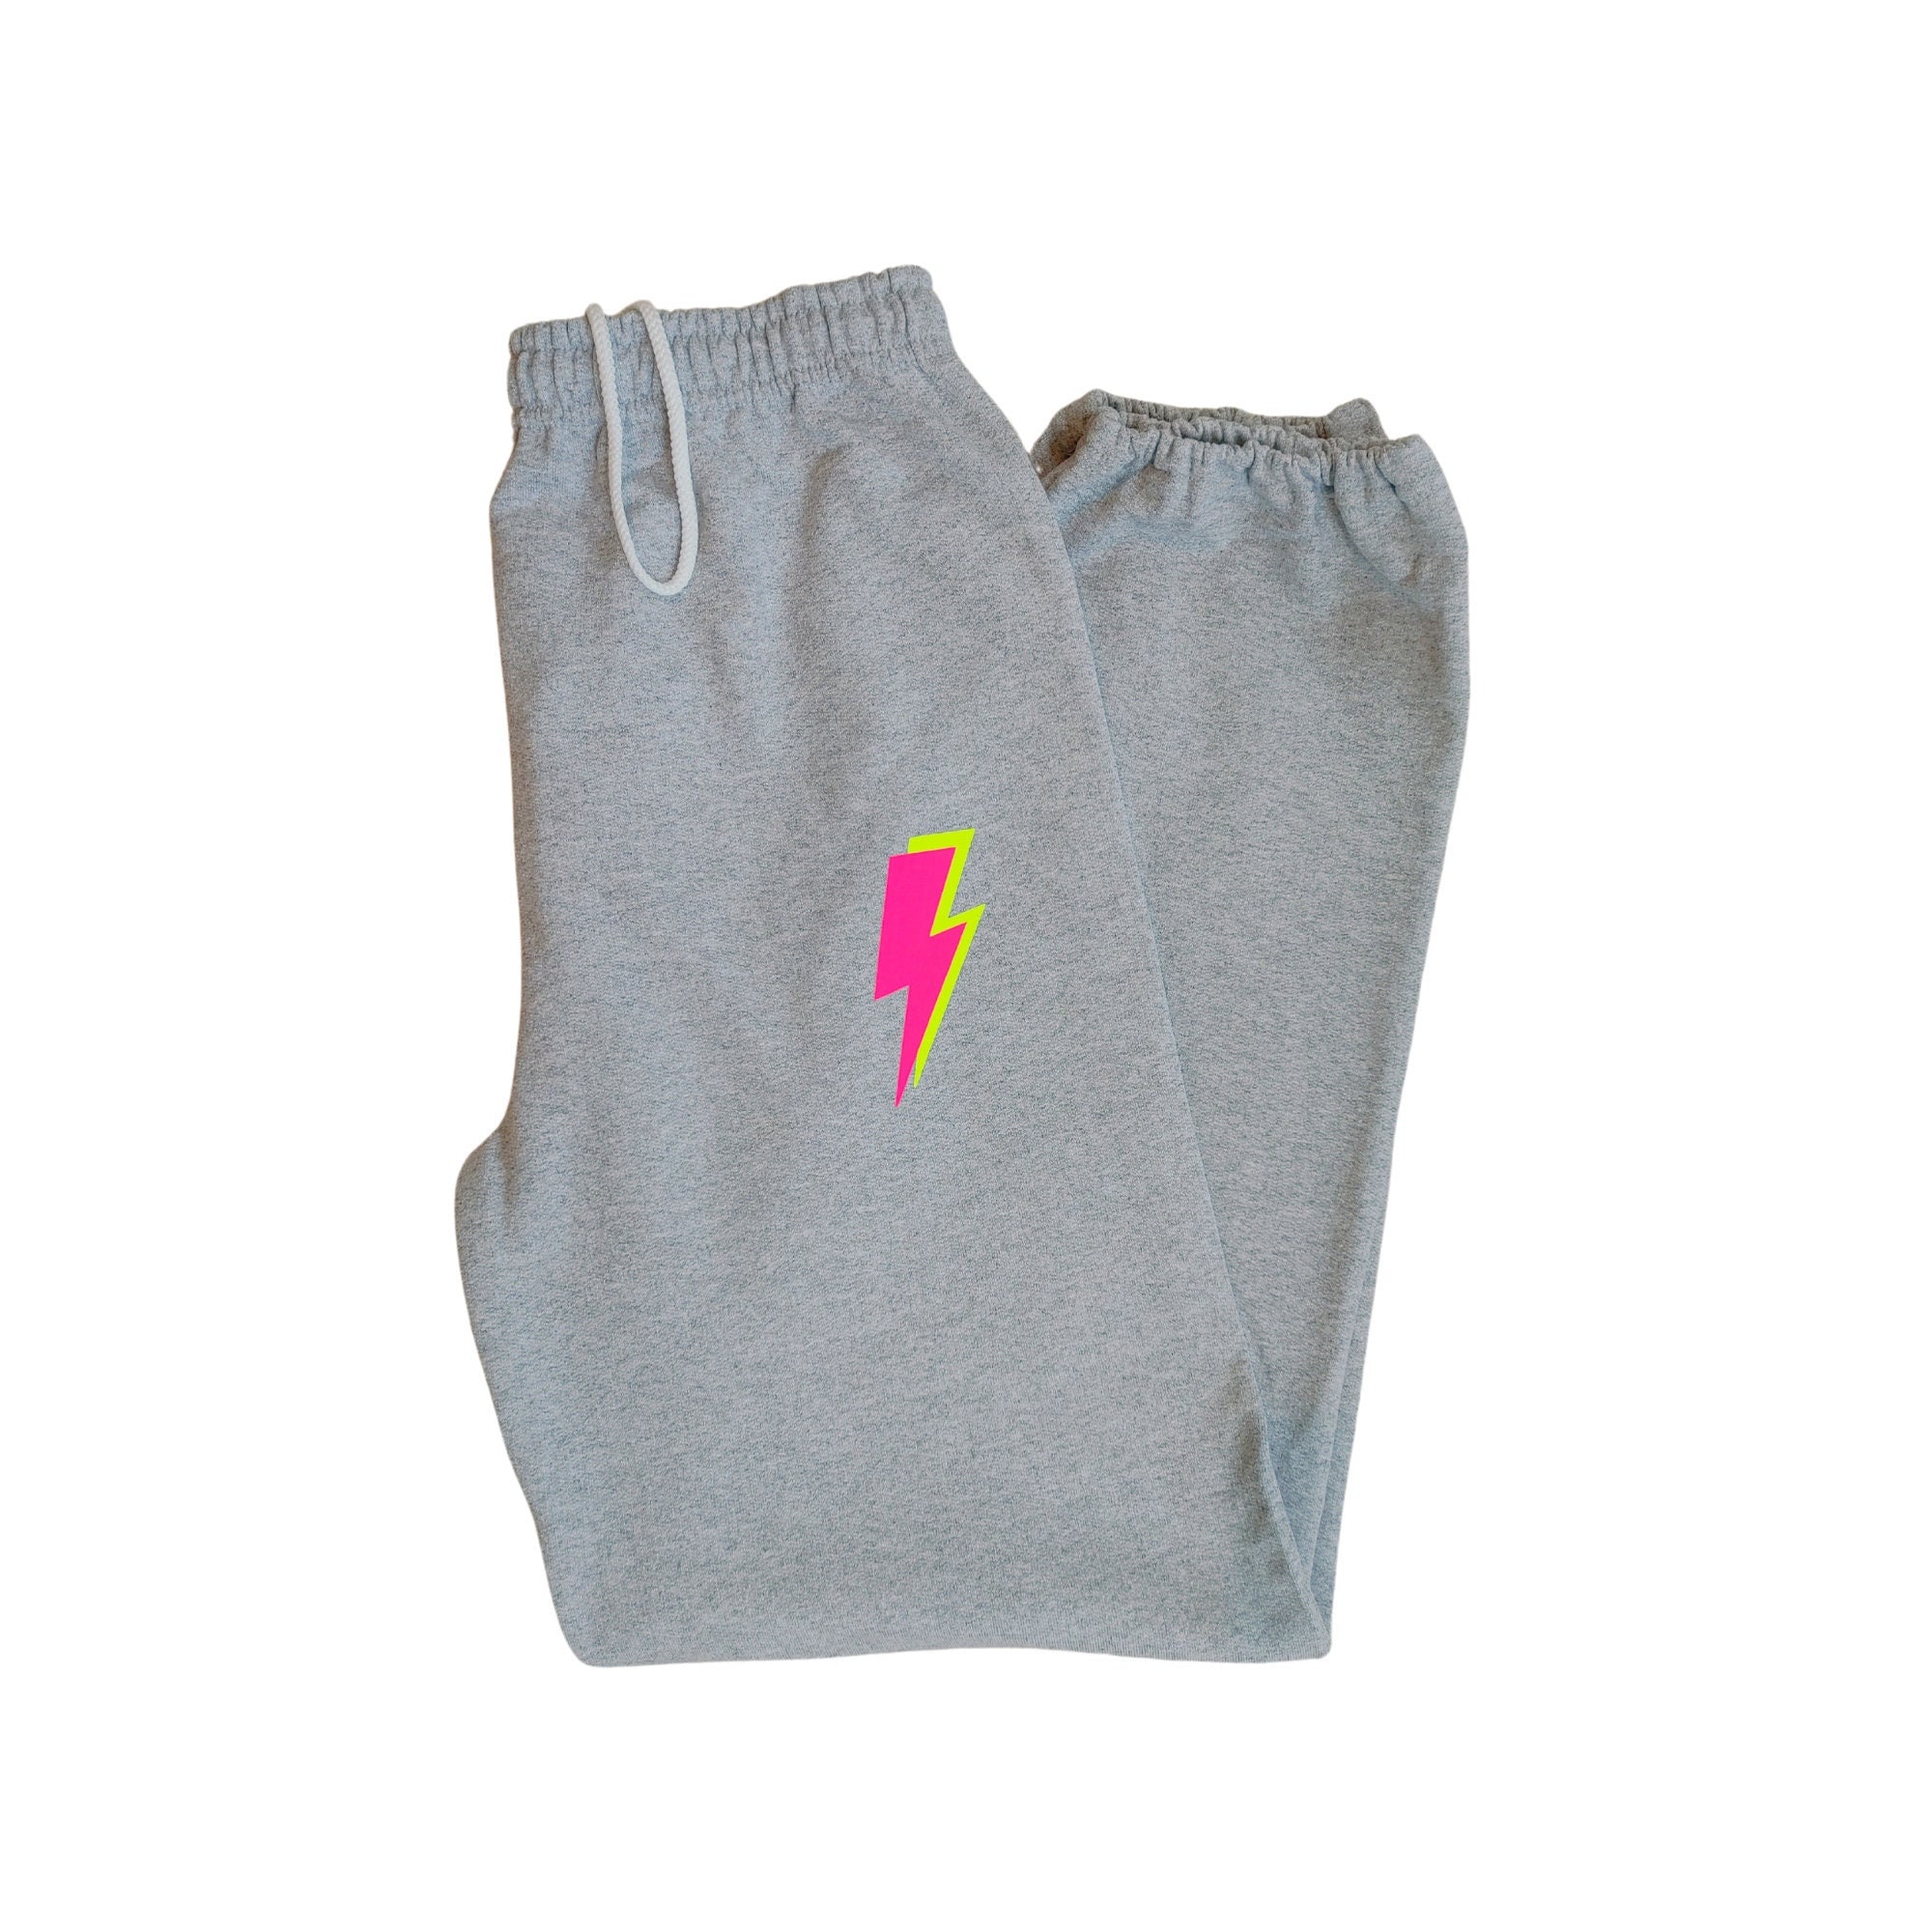 Lightning Bolt Sweatpants, Black Sweatpants, Neon Pink Lighting Bolts on  the Both Sides, Preppy, Trendy, Aesthetics Sweatpants, No Pockets 